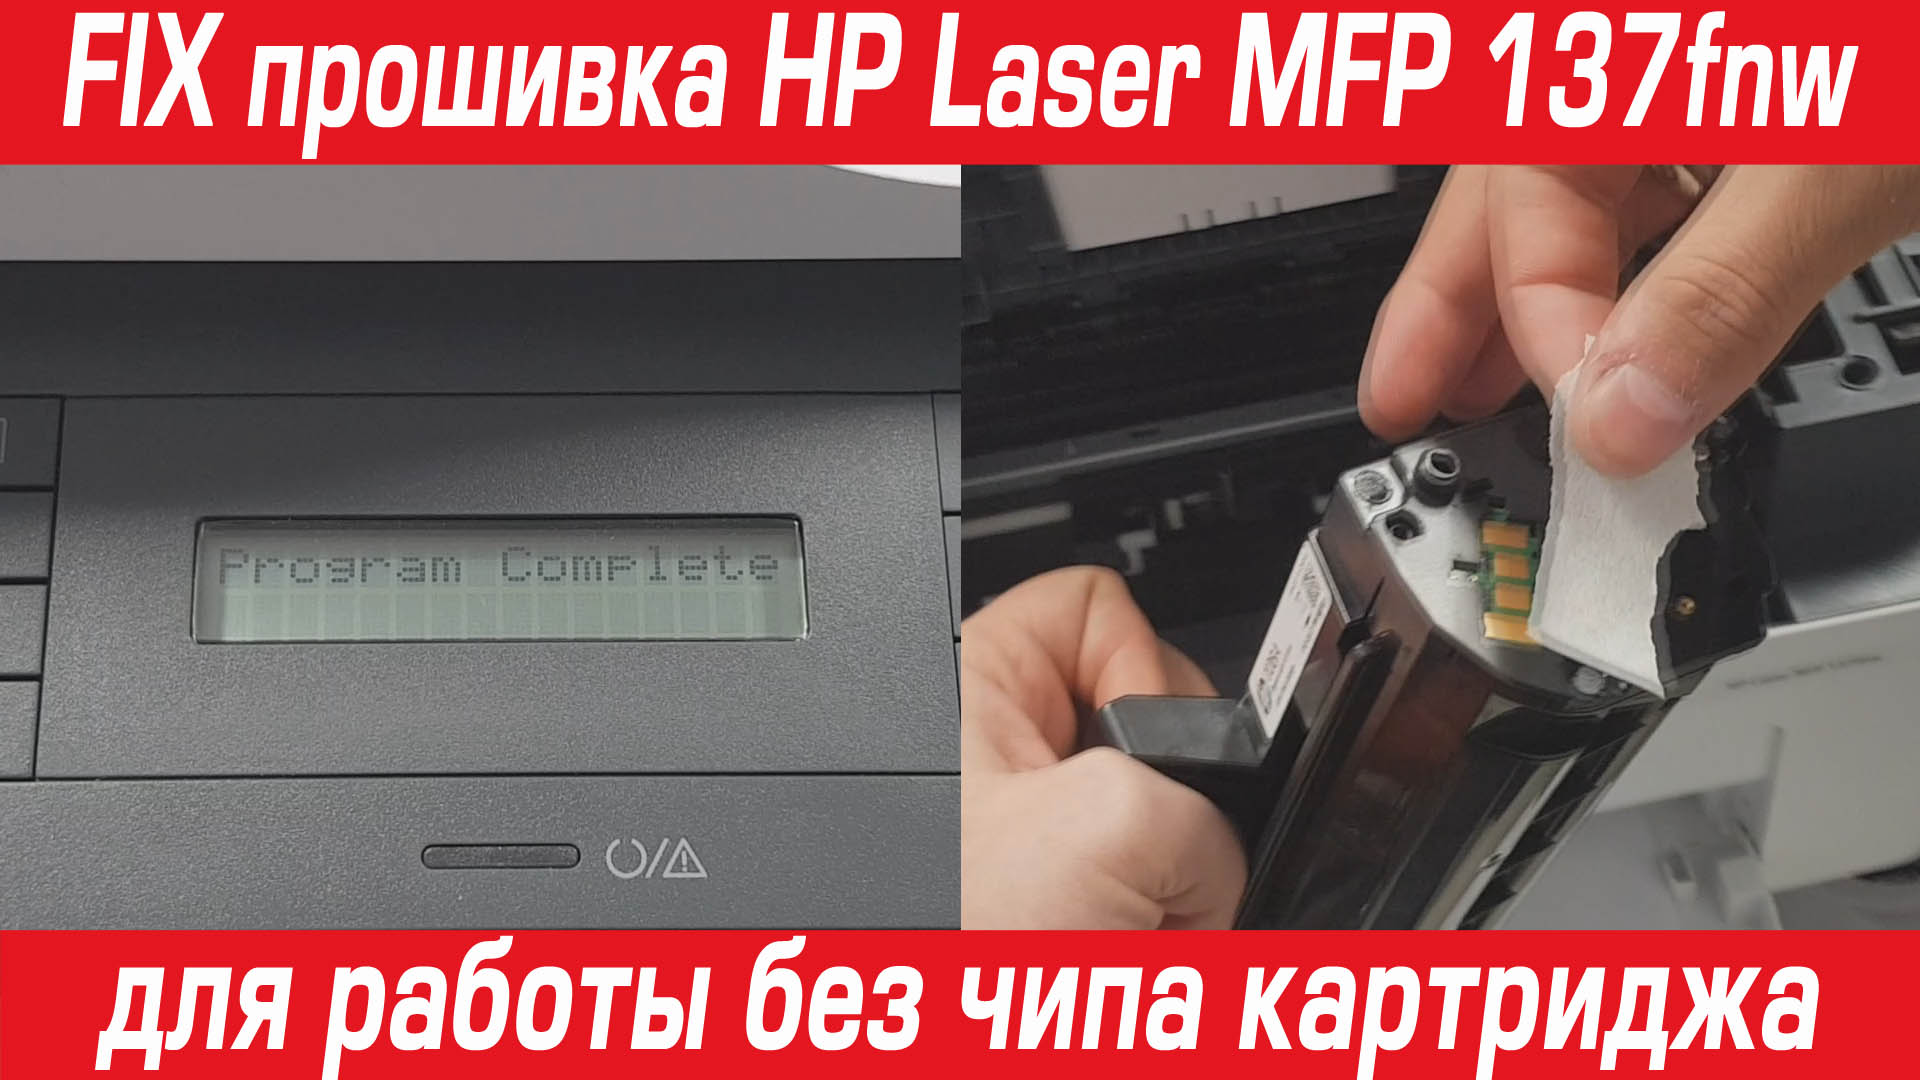 FIX прошивка HP Laser MFP 137fnw для работы без чипа картриджа за 10 минут